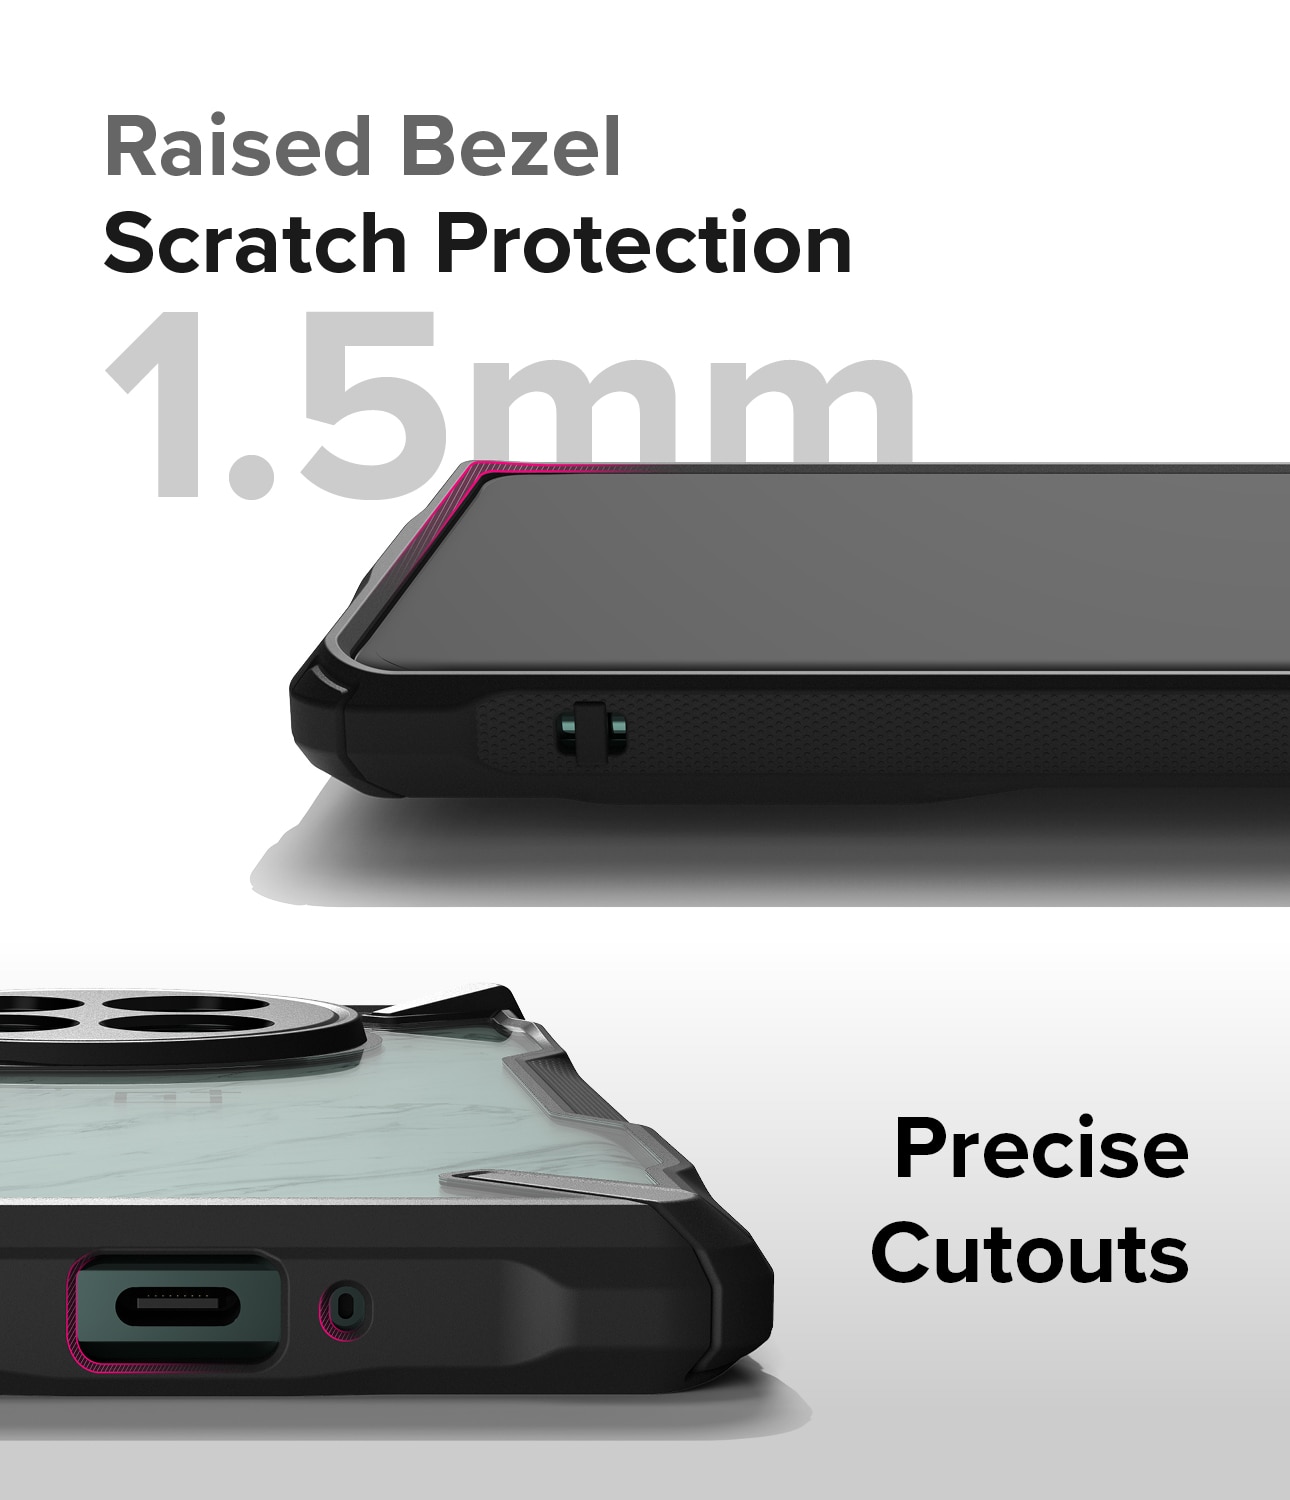 Fusion X Case OnePlus 12 schwarz